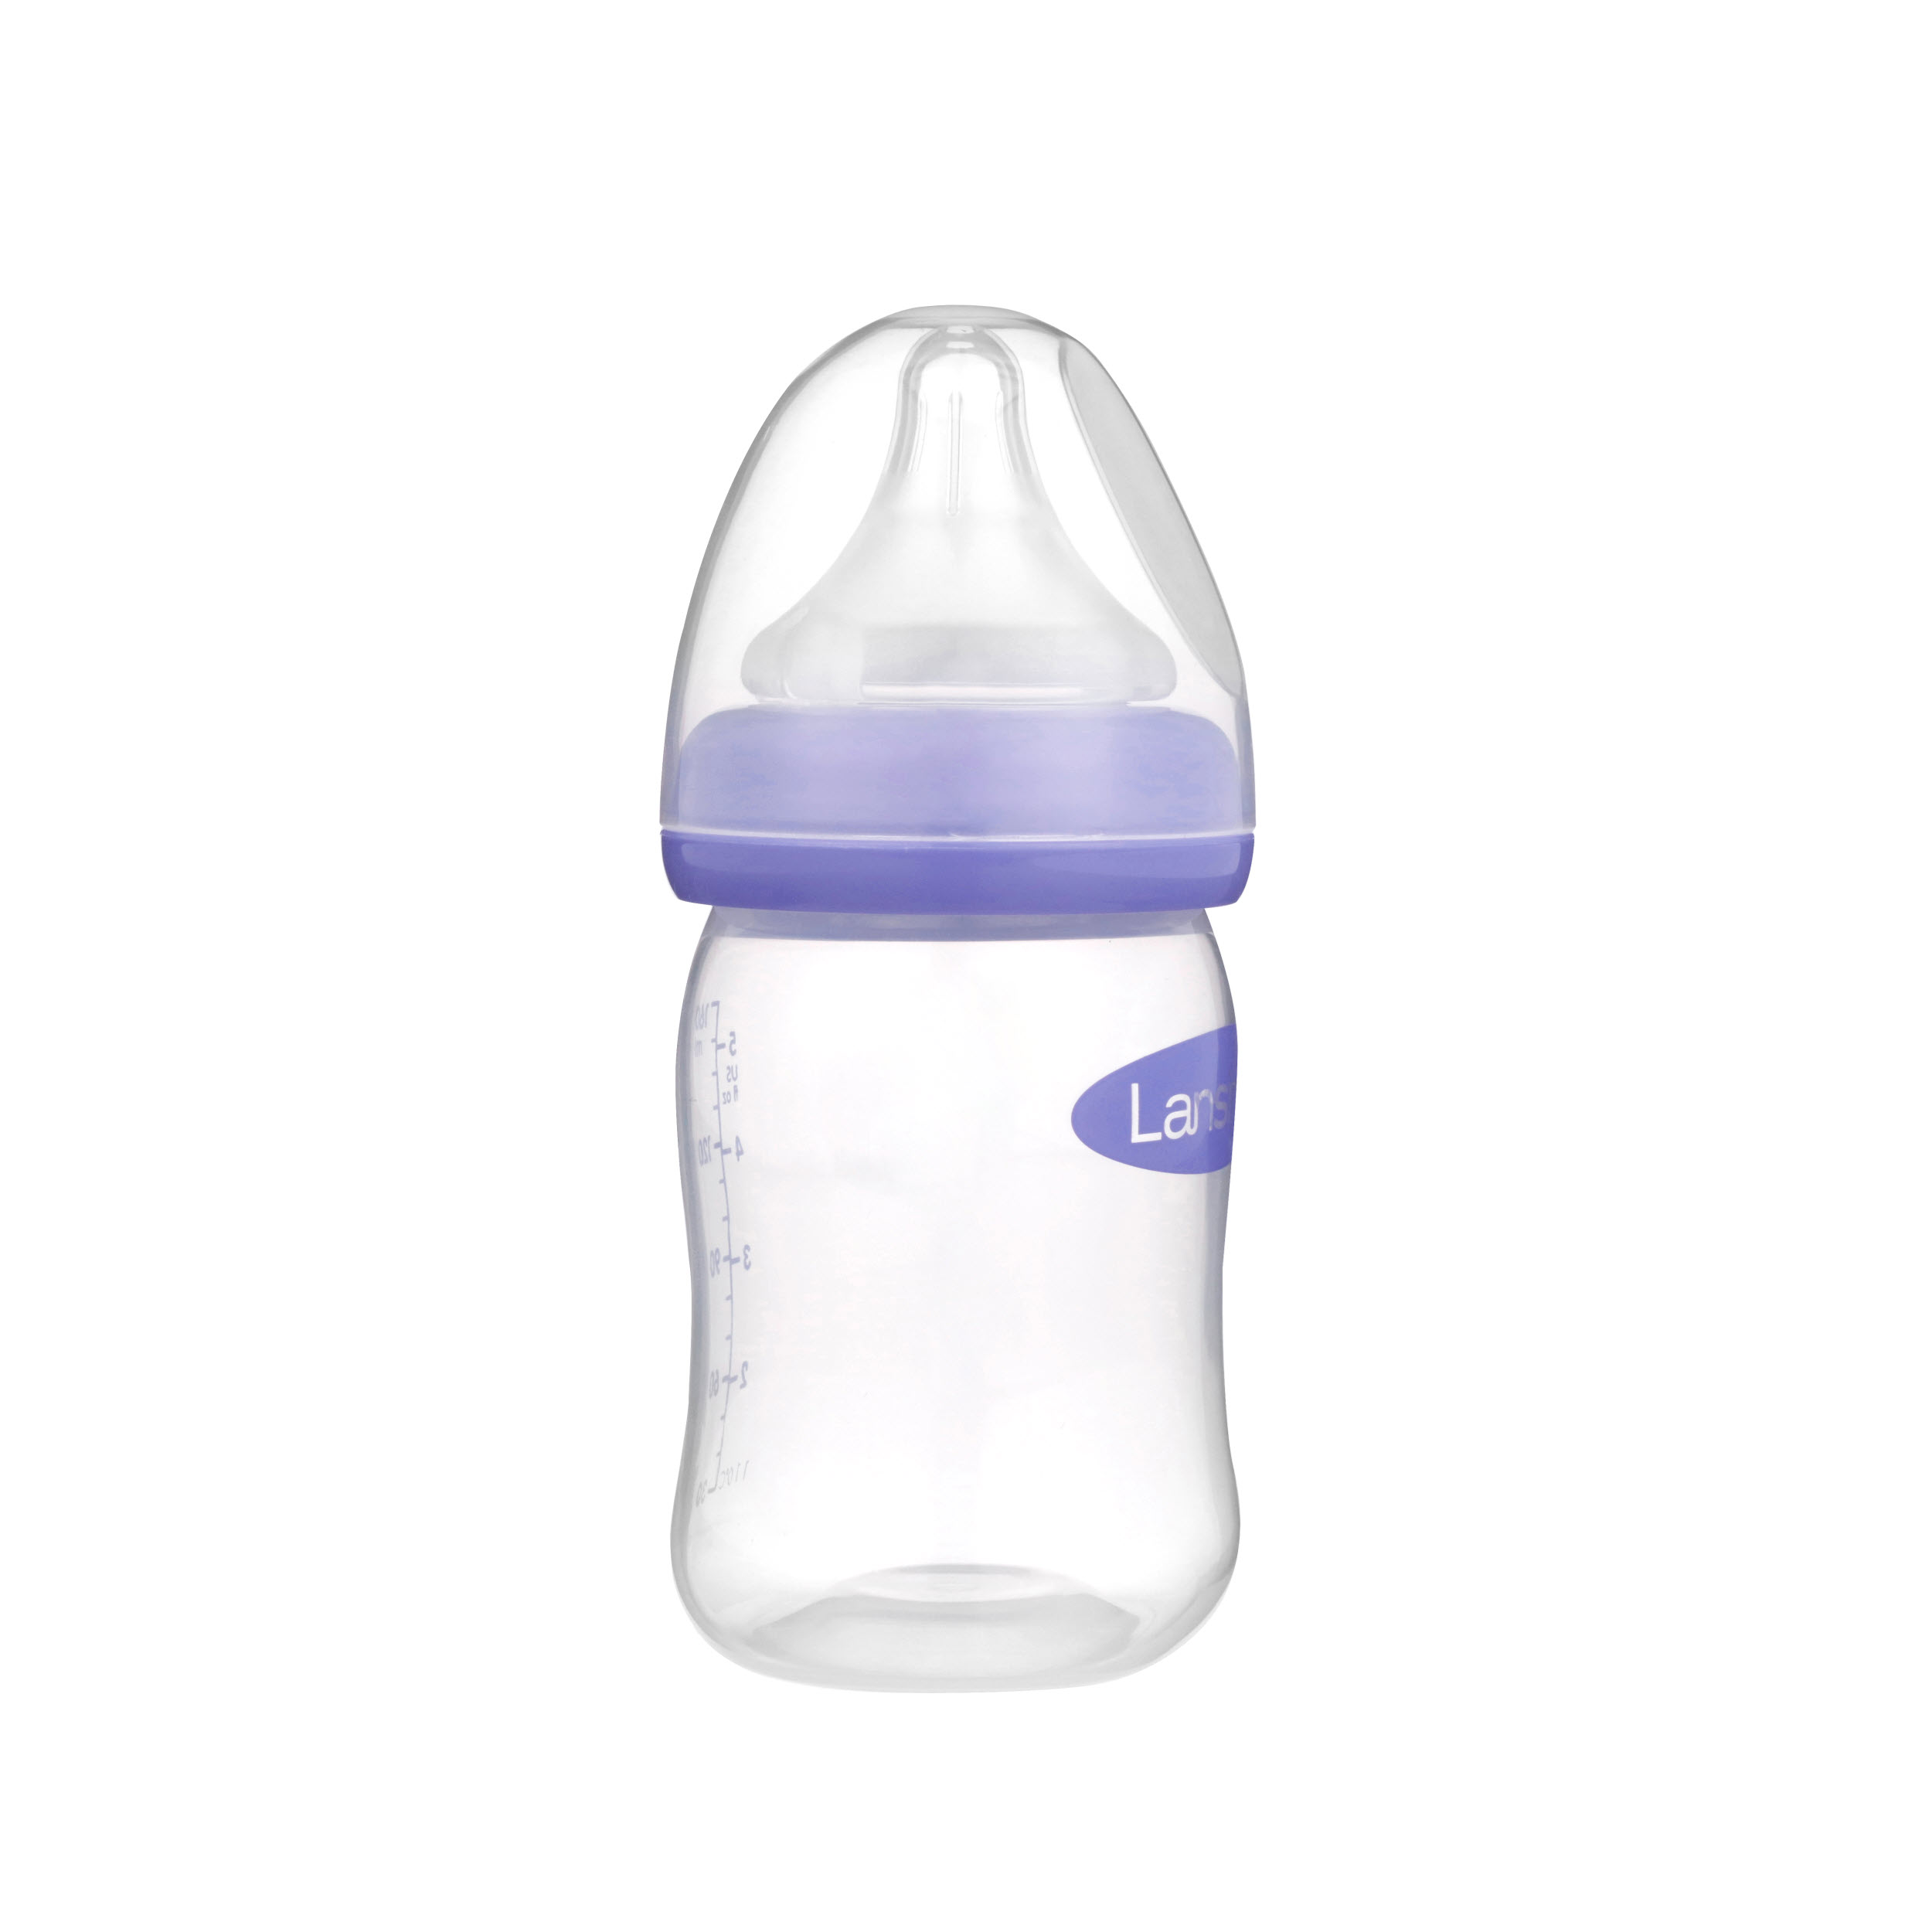 Lansinoh Breastfeeding Bottles with NaturalWave Nipple (5oz)